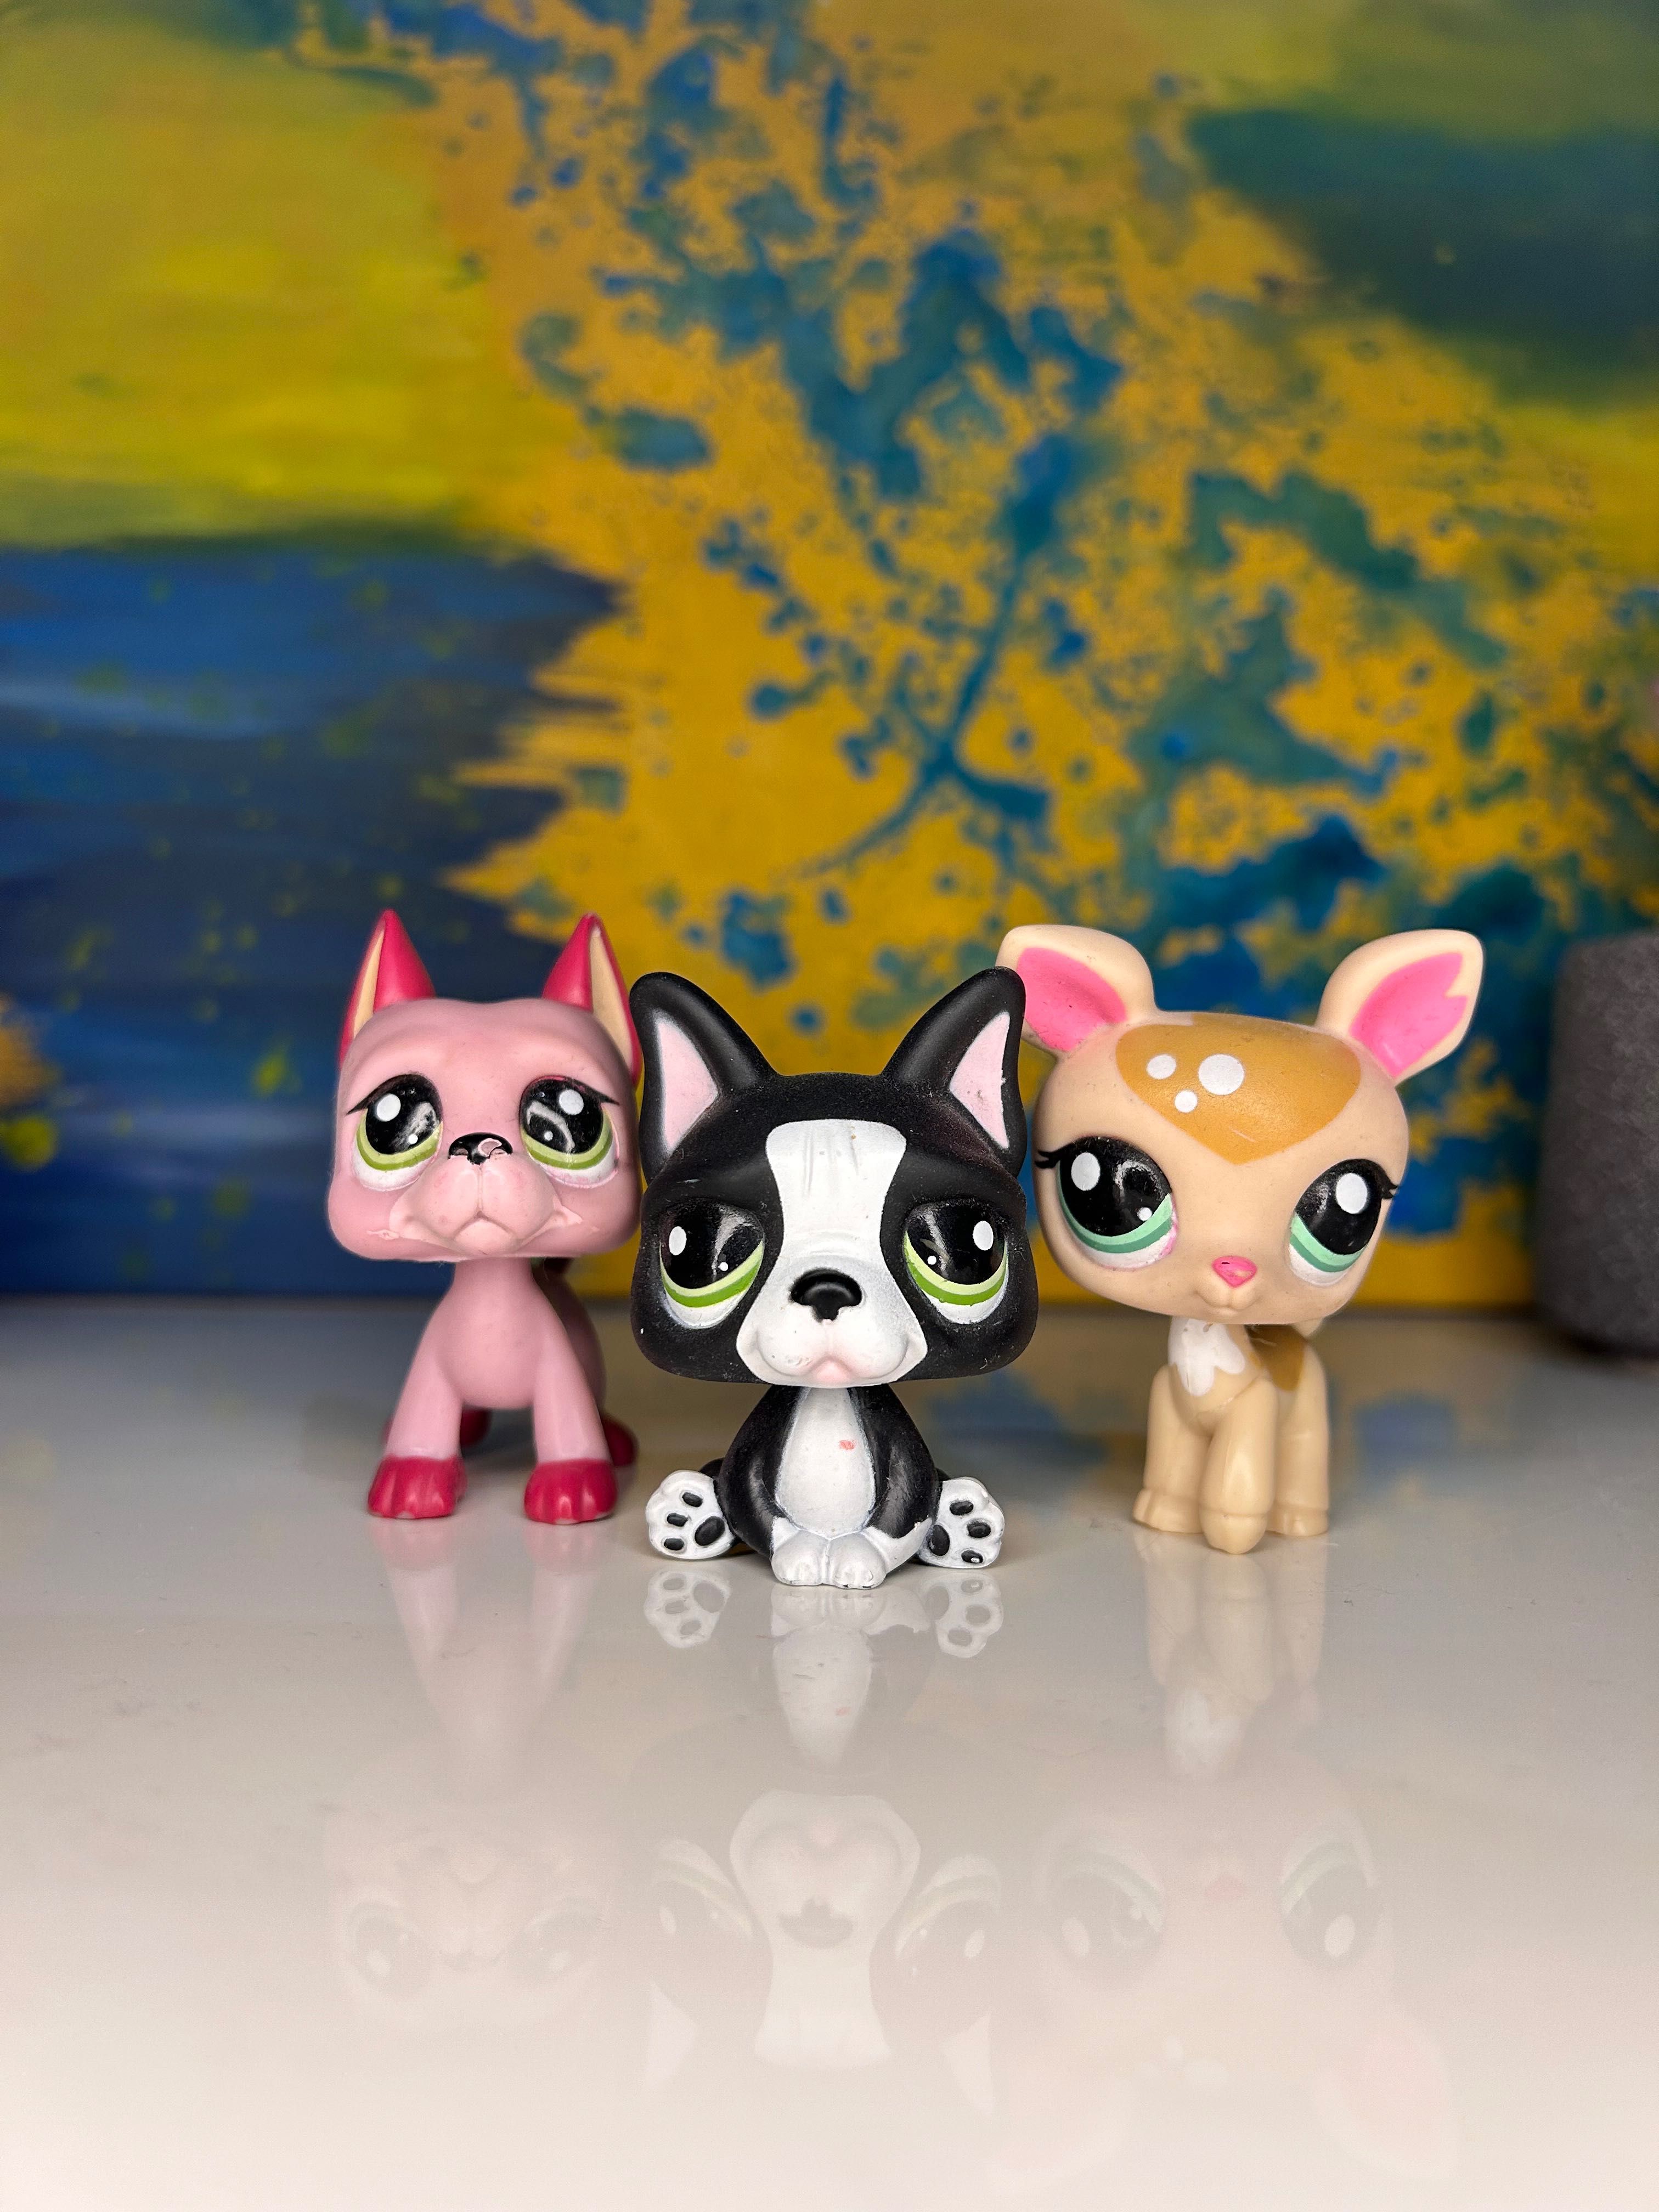 Lps лпс Littlest pet shop іграшки котик собака панда